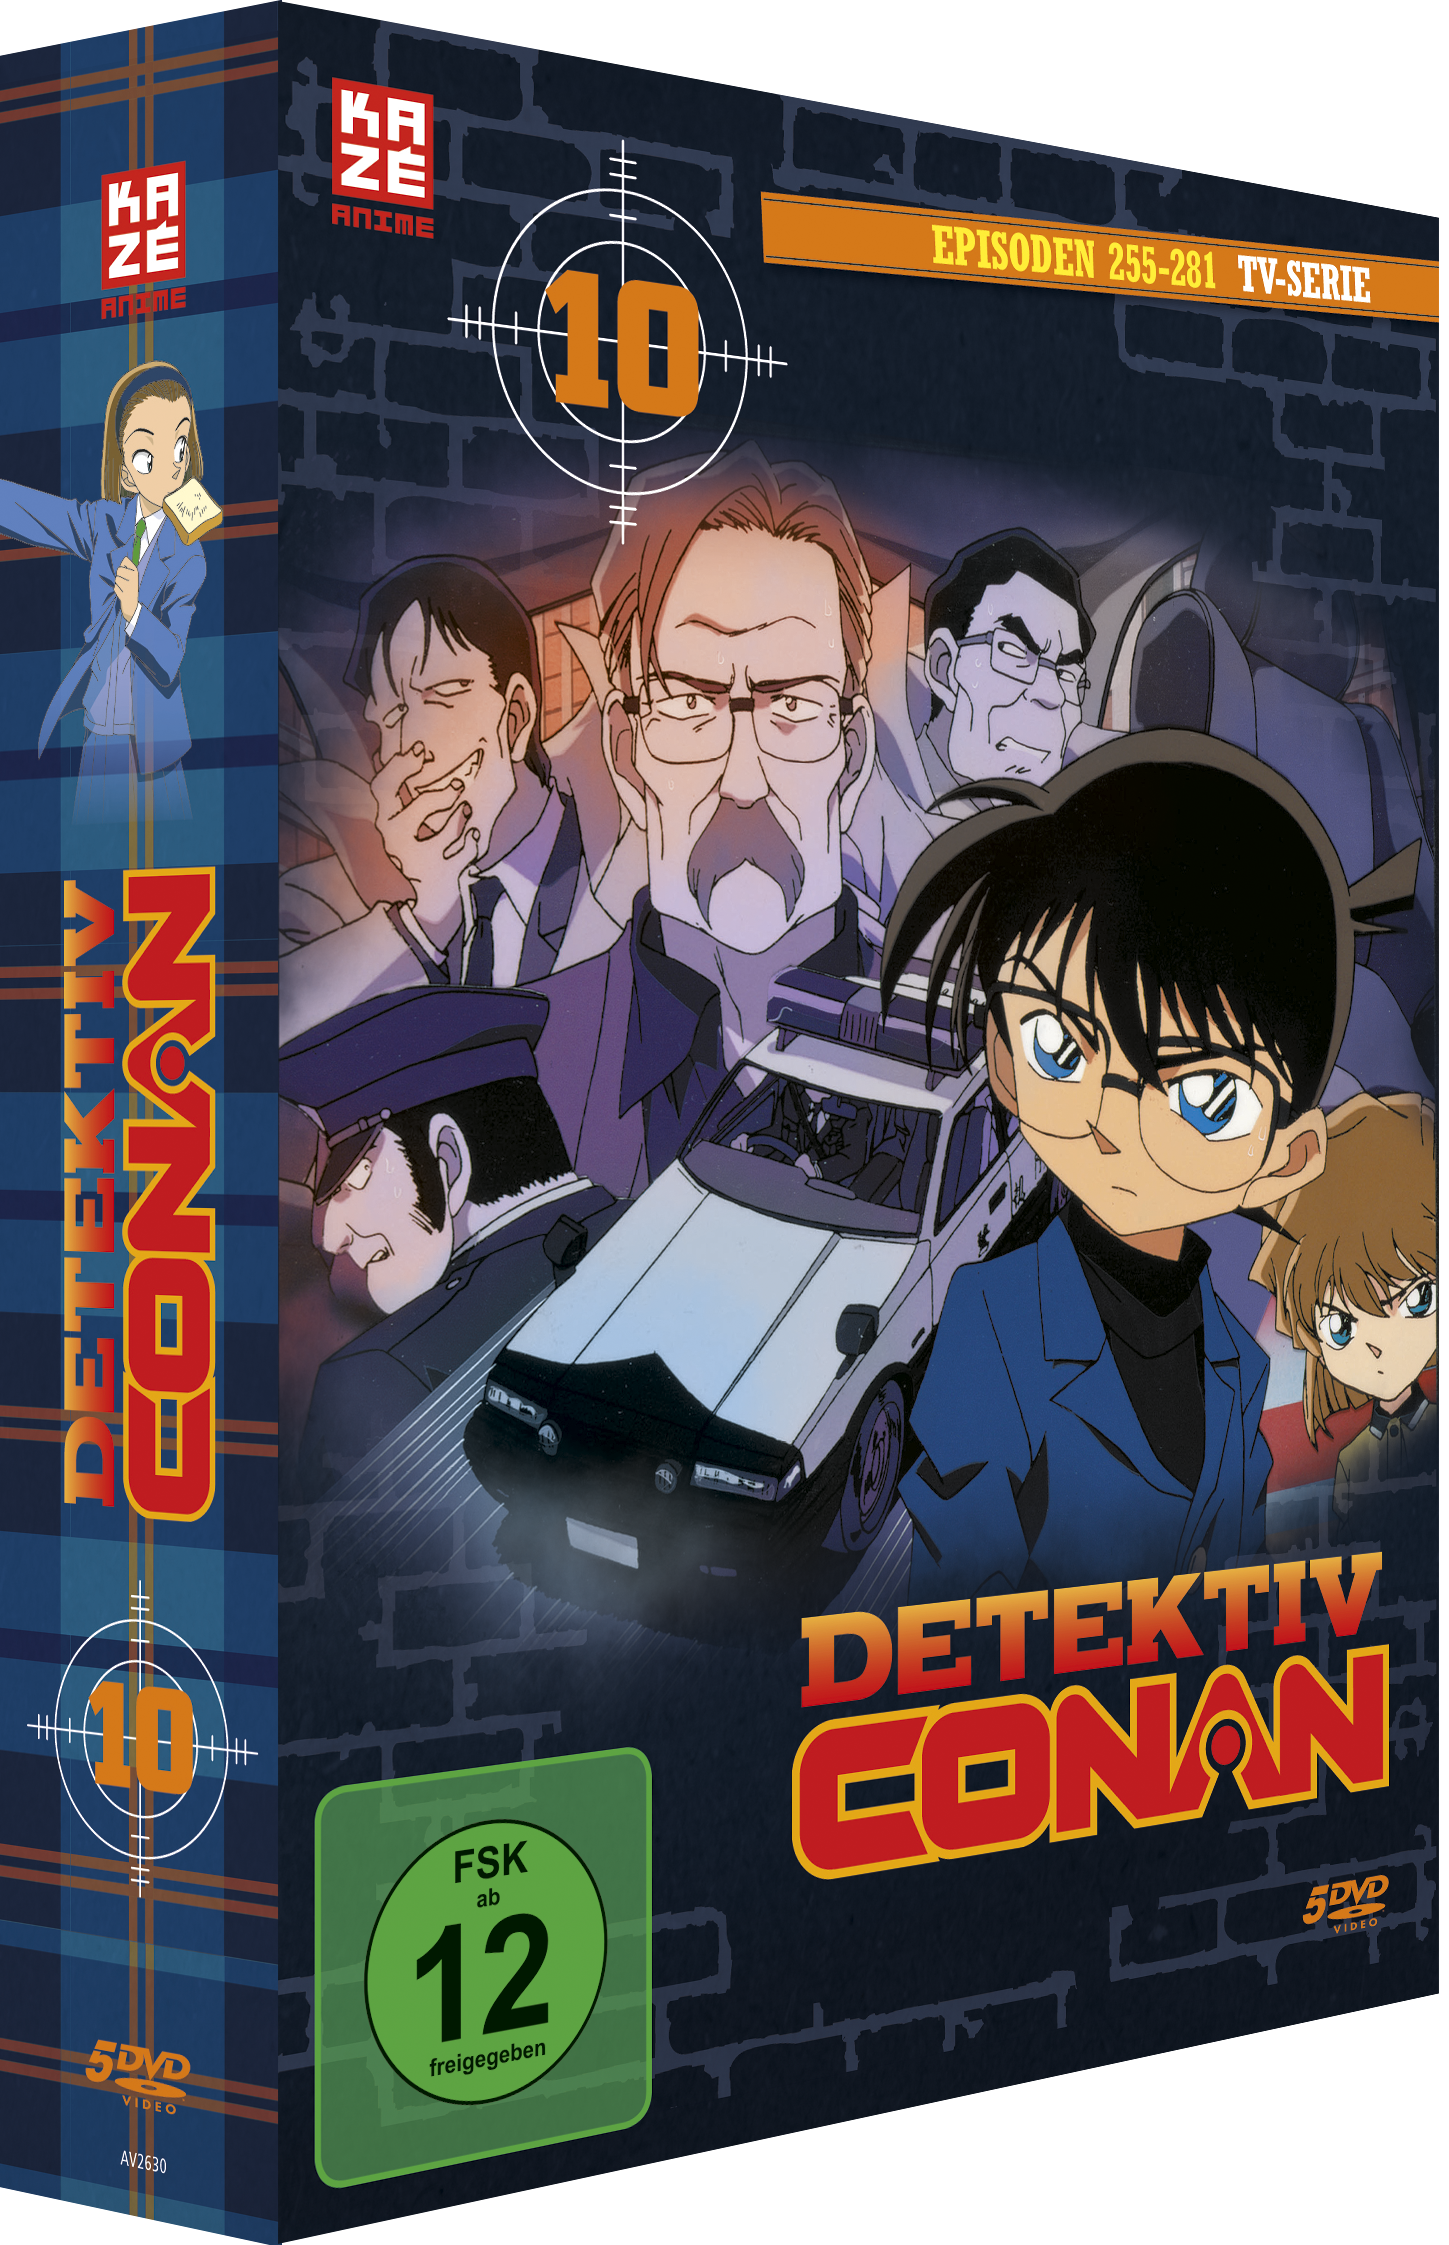 Detektiv Conan - TV-Serie - 10 DVD (Episoden DVD 255-280) Box